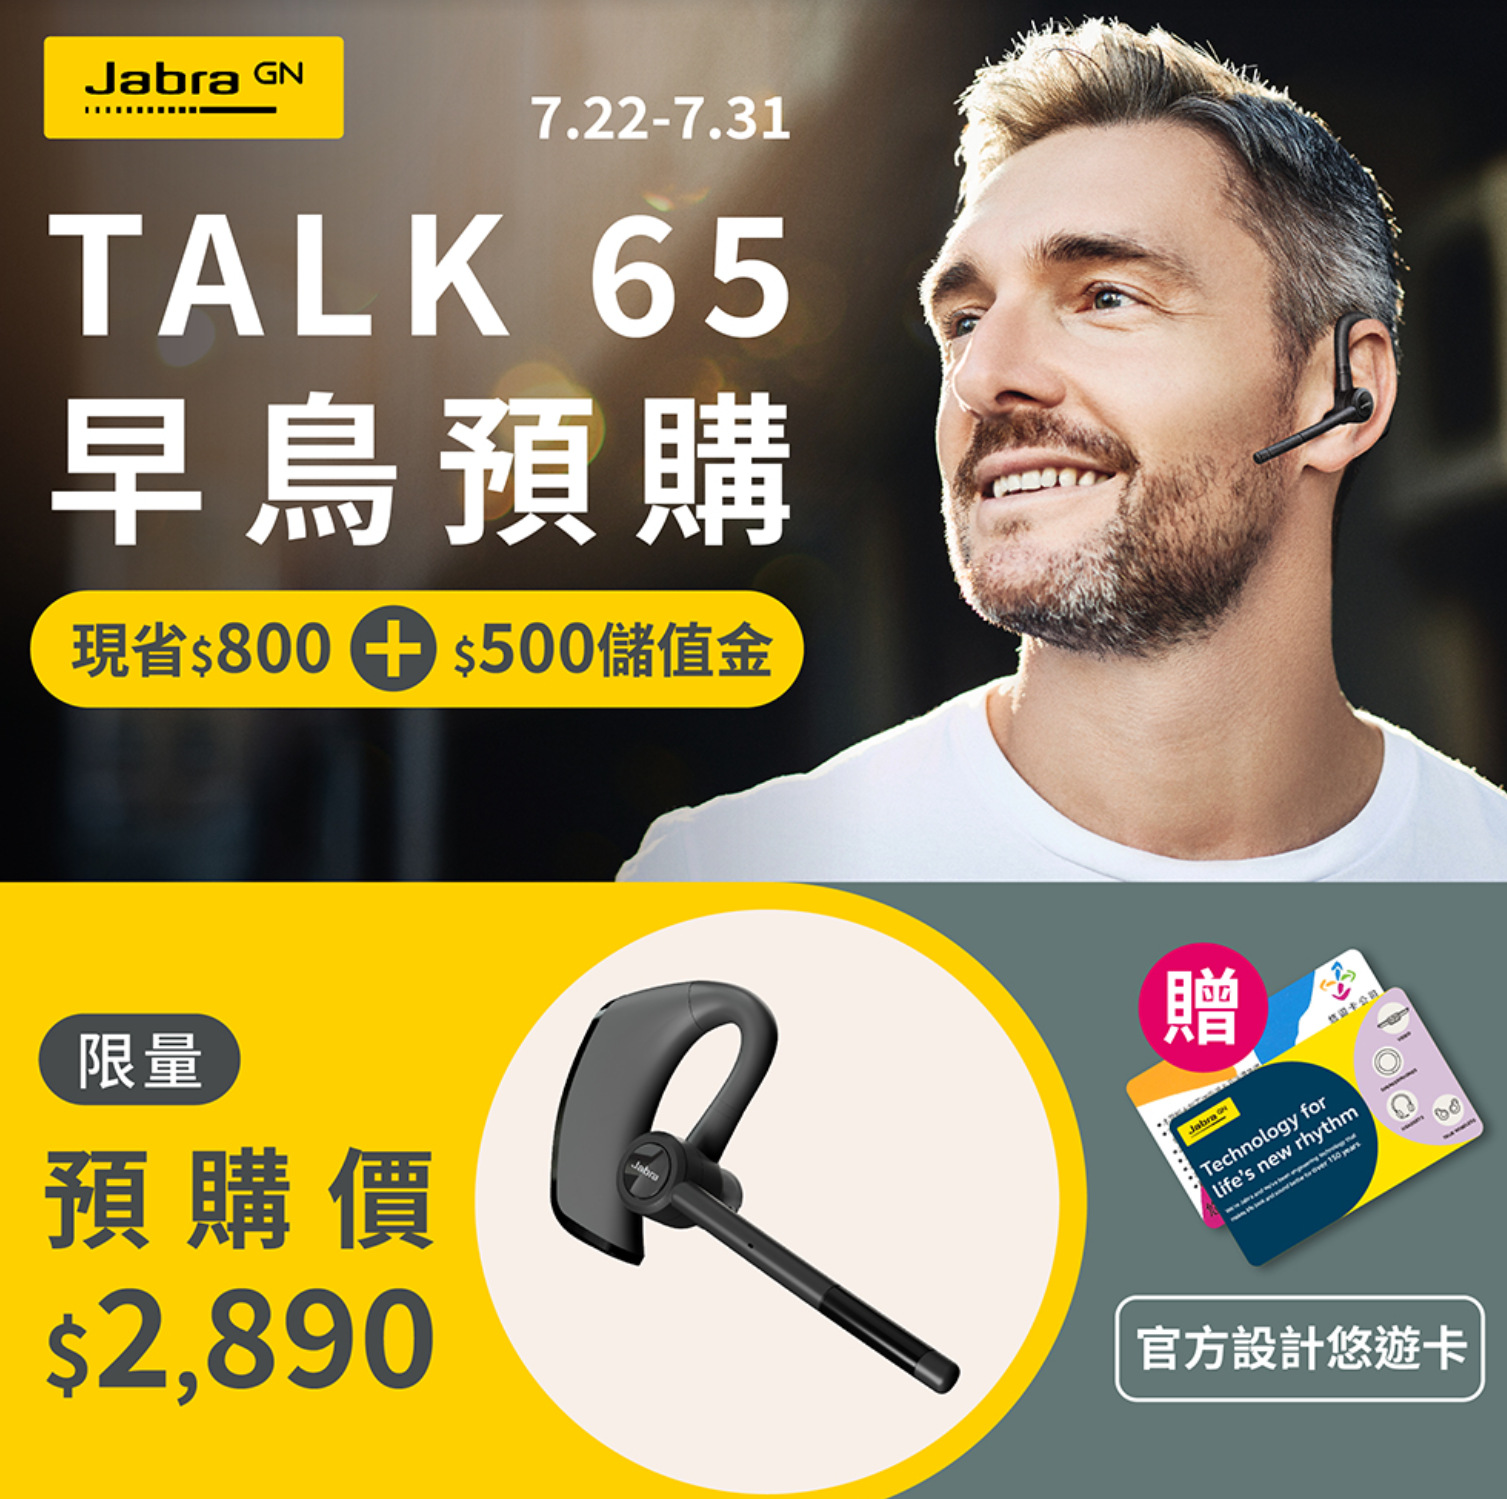 【Jabra】Talk65通訊耳機王者，單耳藍牙耳機旗艦款，新品預購早鳥優惠。 - Jabra - 敗家達人推薦